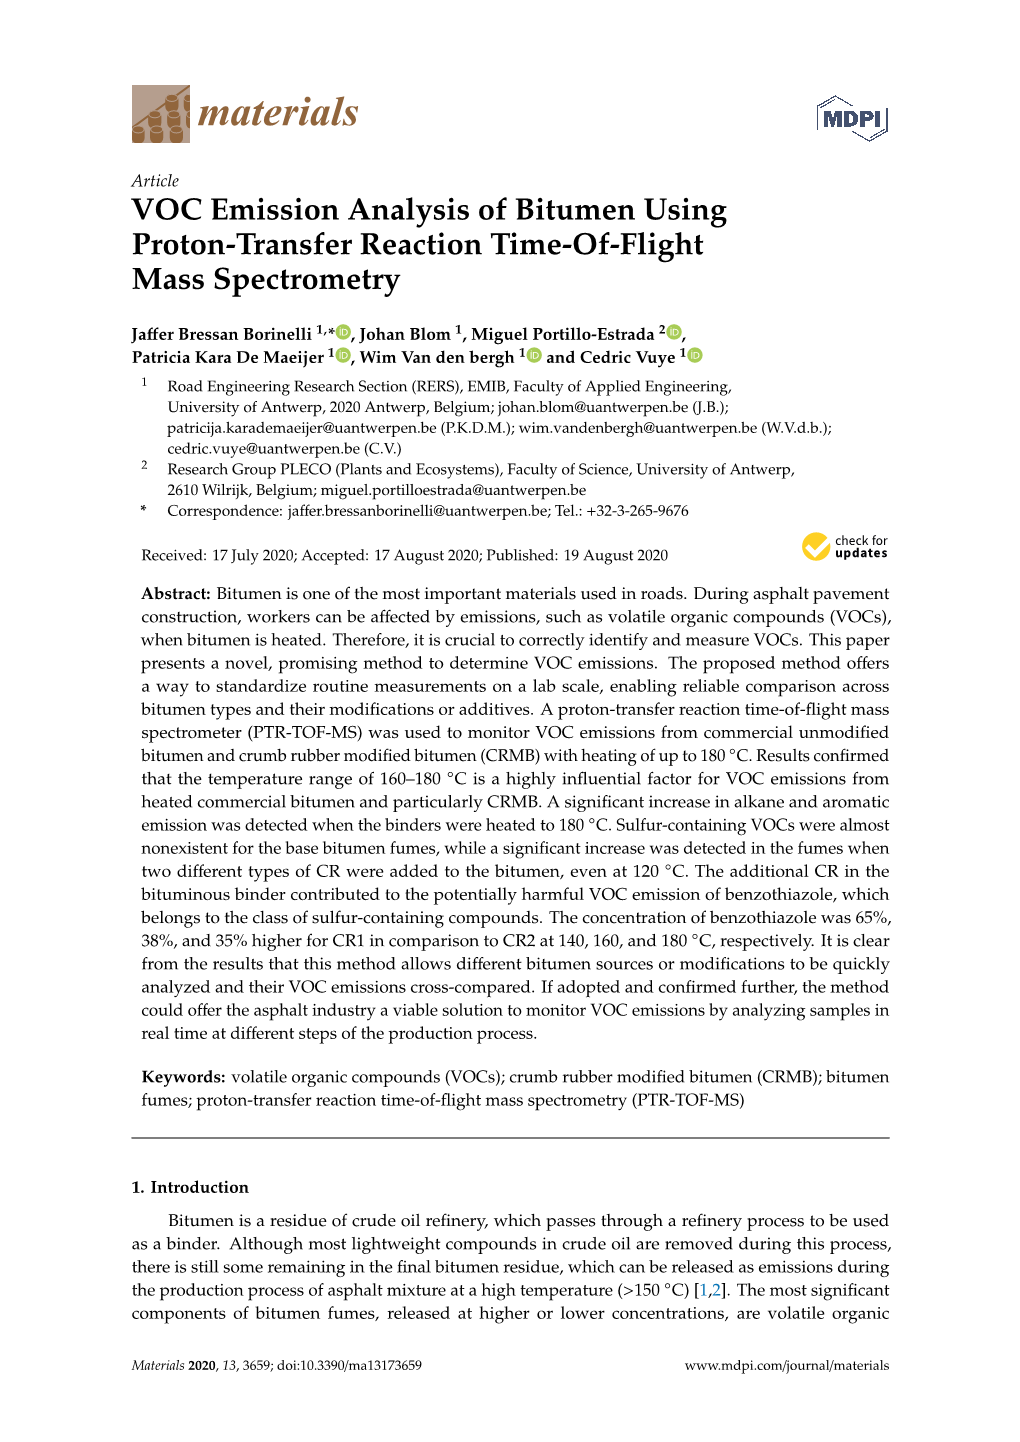 VOC Emission Analysis of Bitumen Using Proton-Transfer Reaction Time-Of-Flight Mass Spectrometry